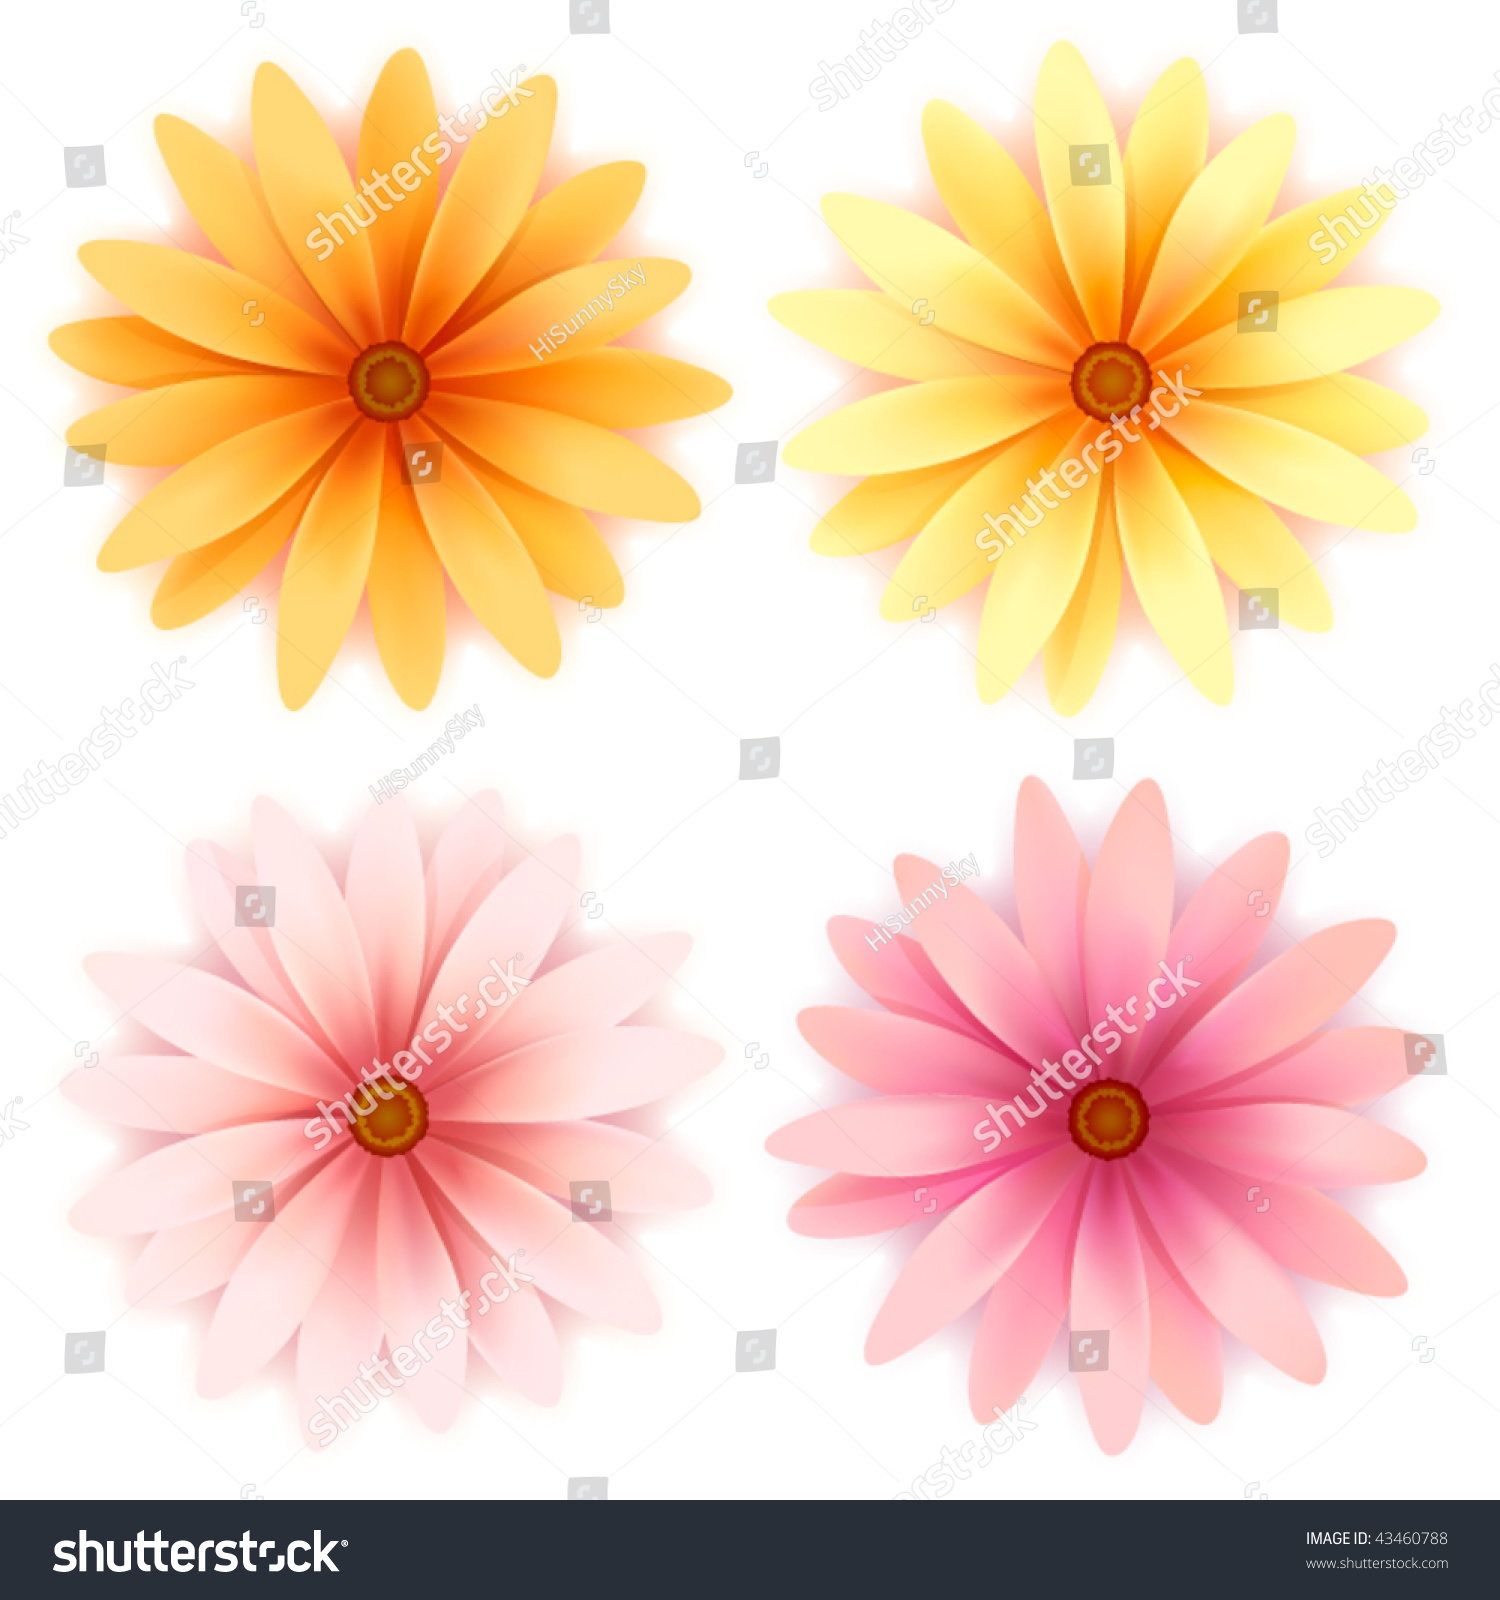 Vector Daisy Flowers Set Isolated On White - 43460788 : Shutterstock